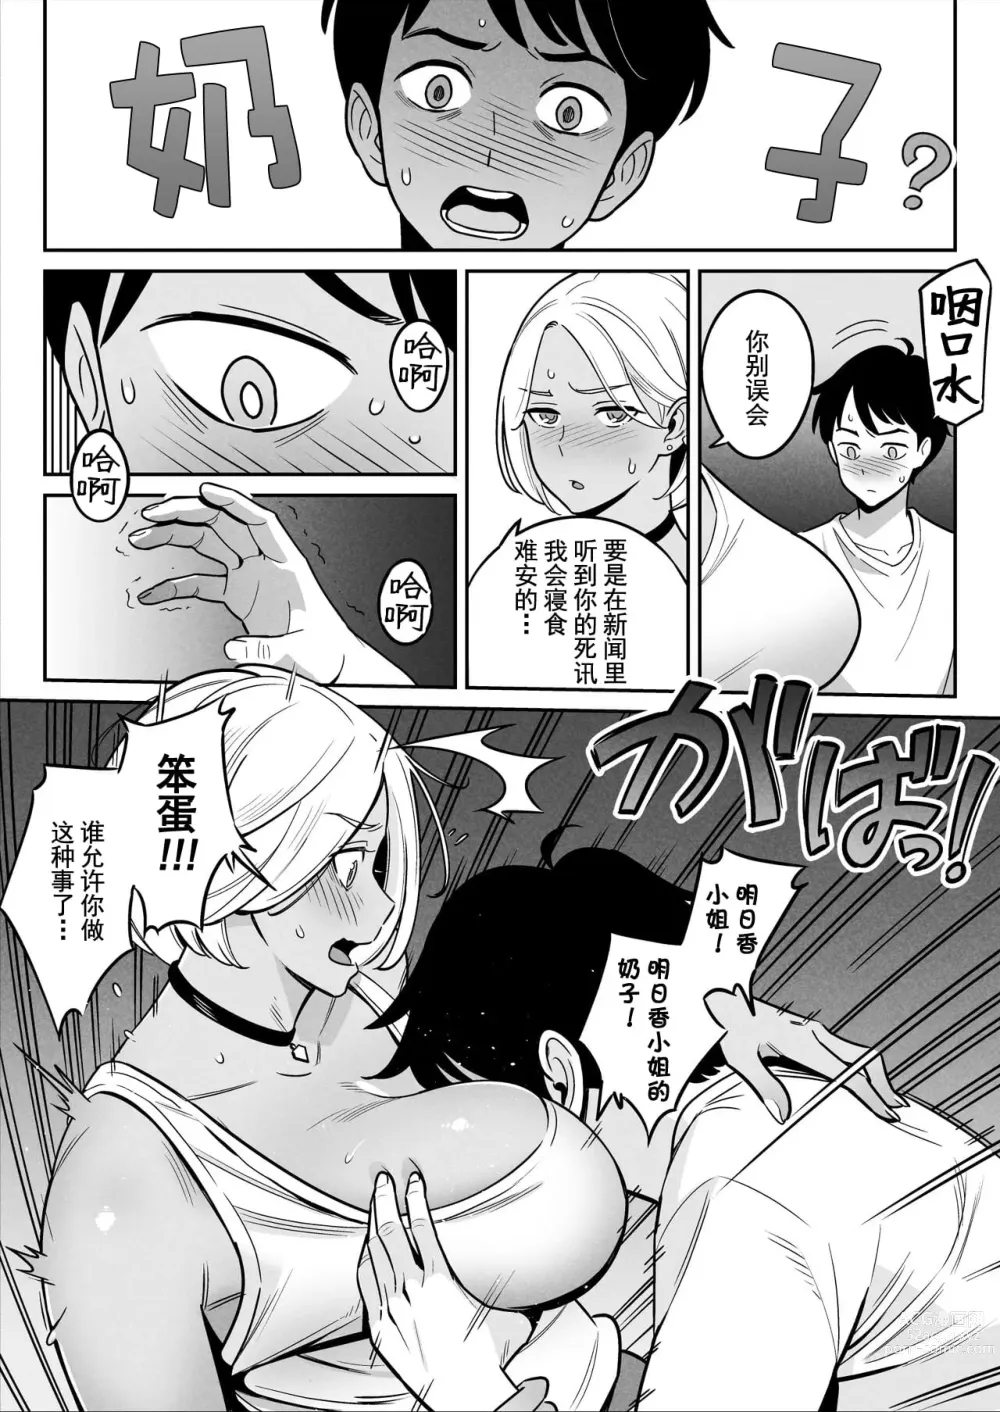 Page 17 of manga Muchi Niku Heaven de Pan Pan Pan